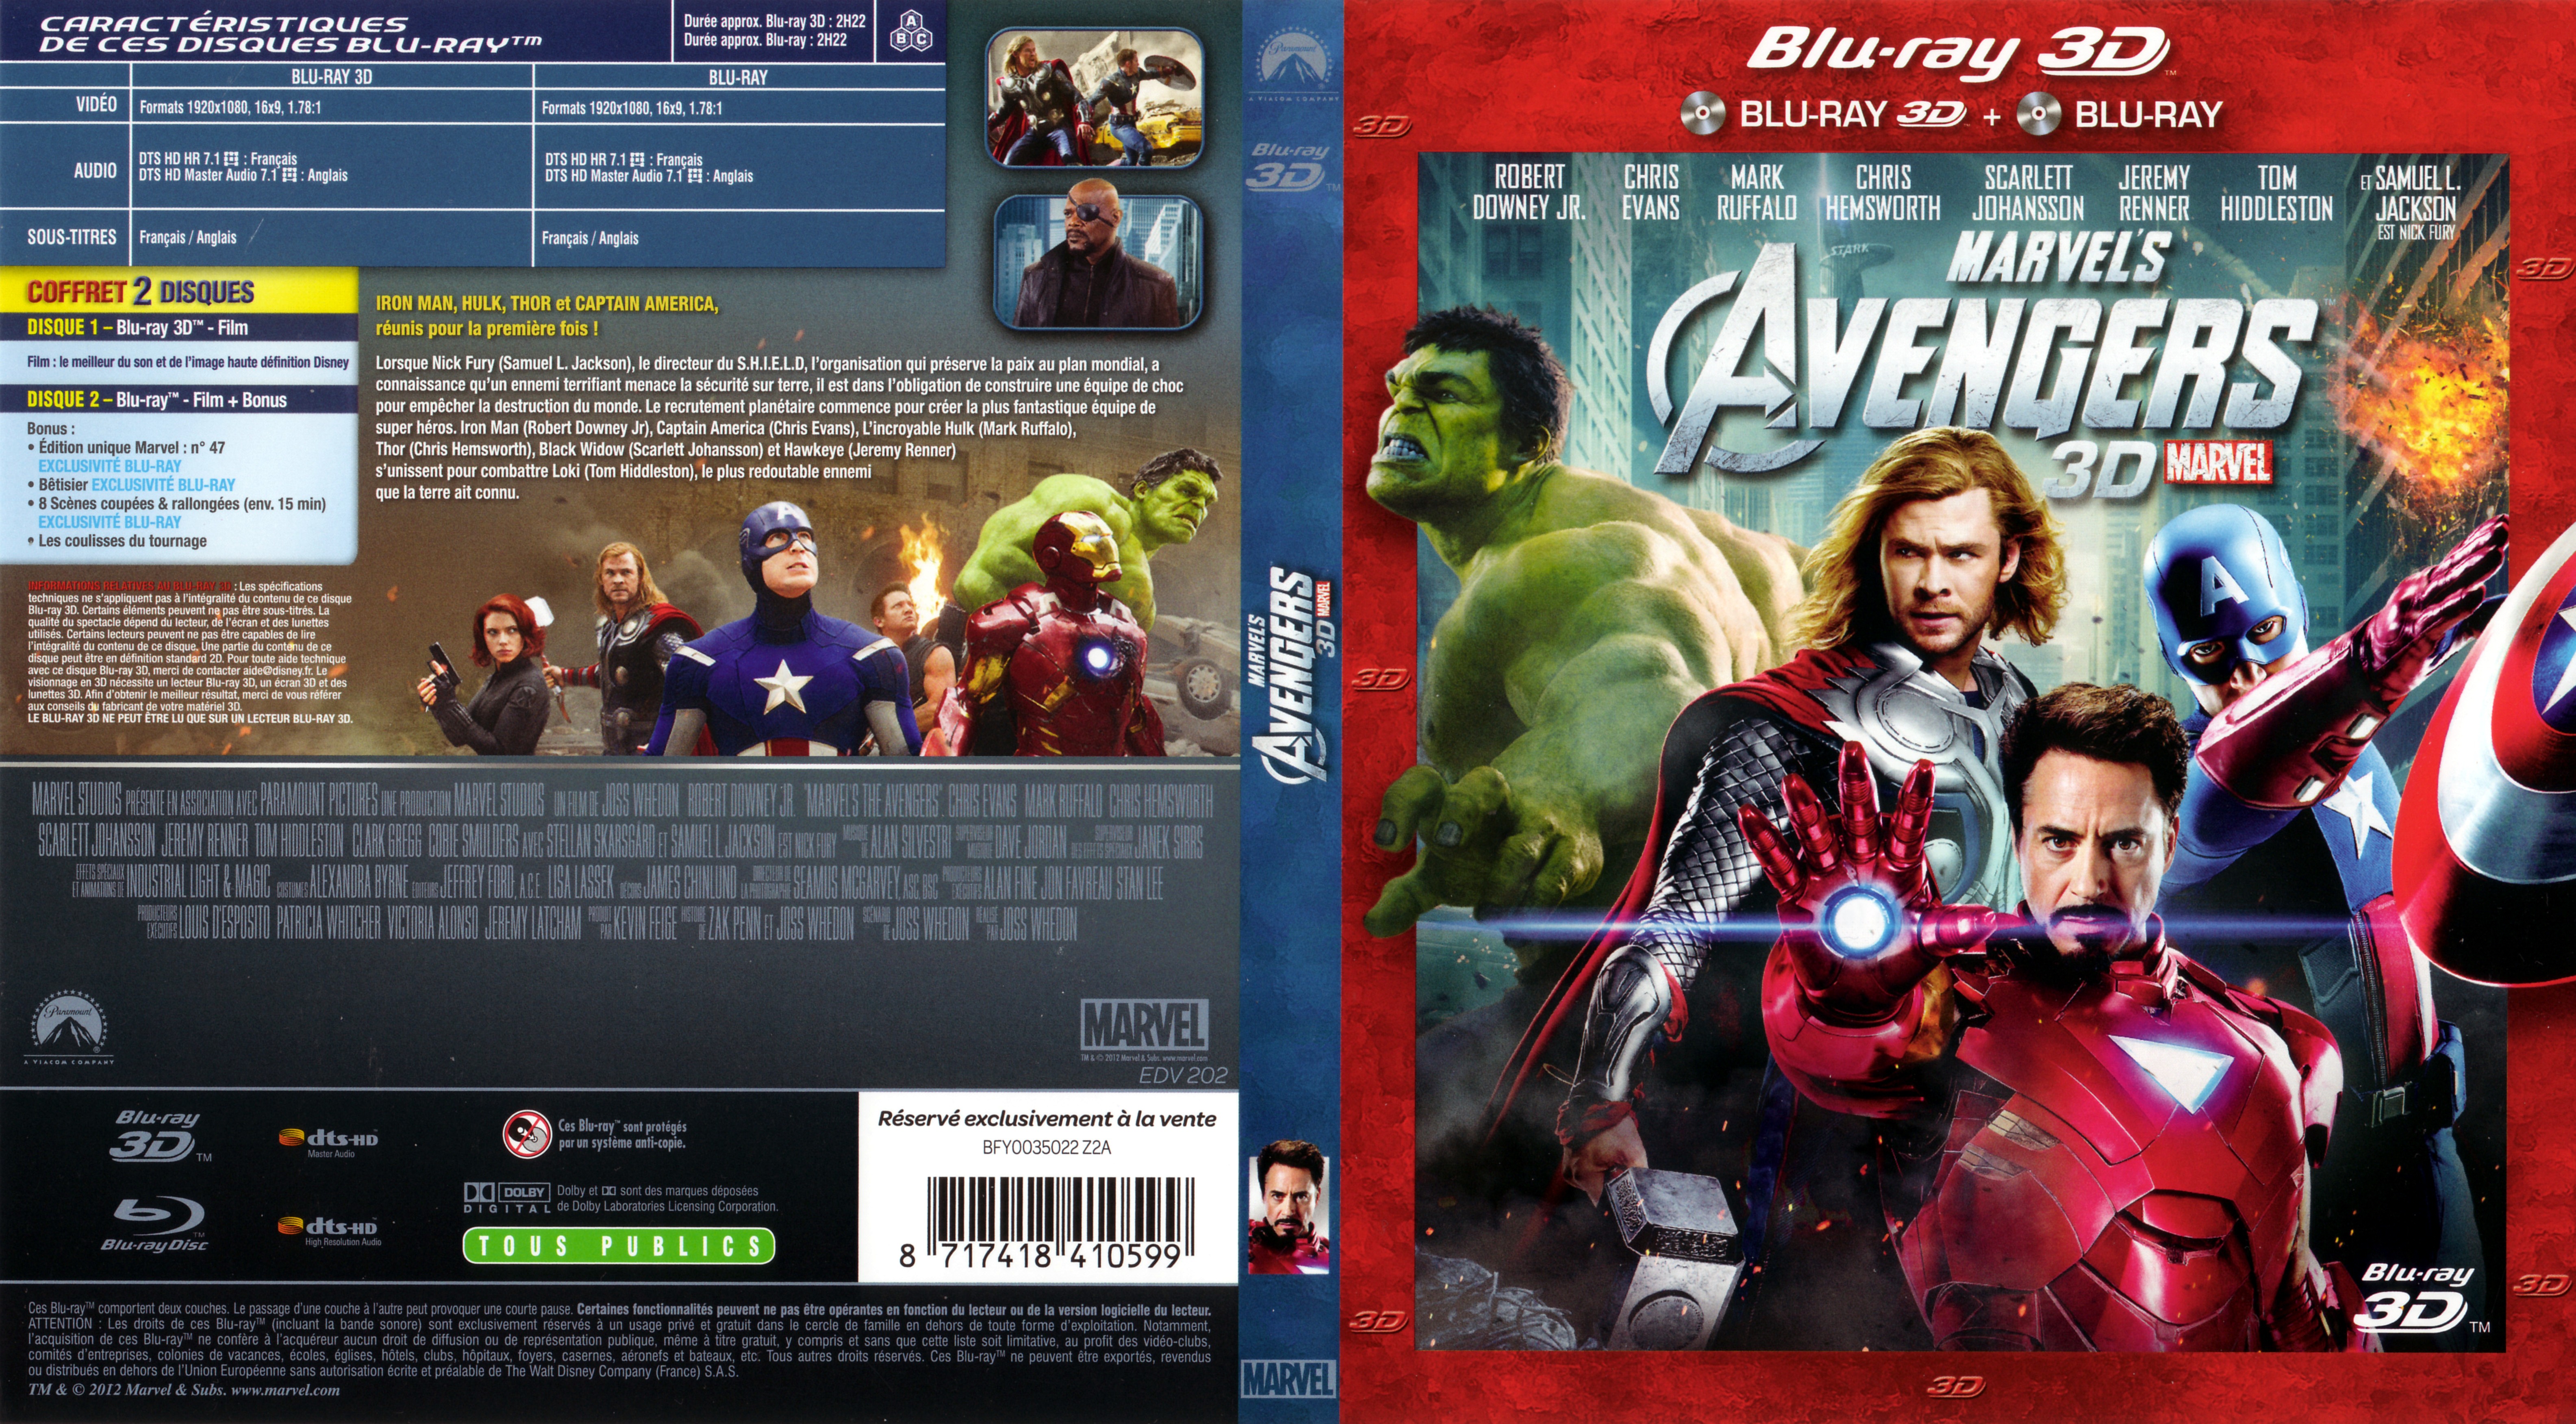 Jaquette DVD Avengers 3D (BLU-RAY) v2